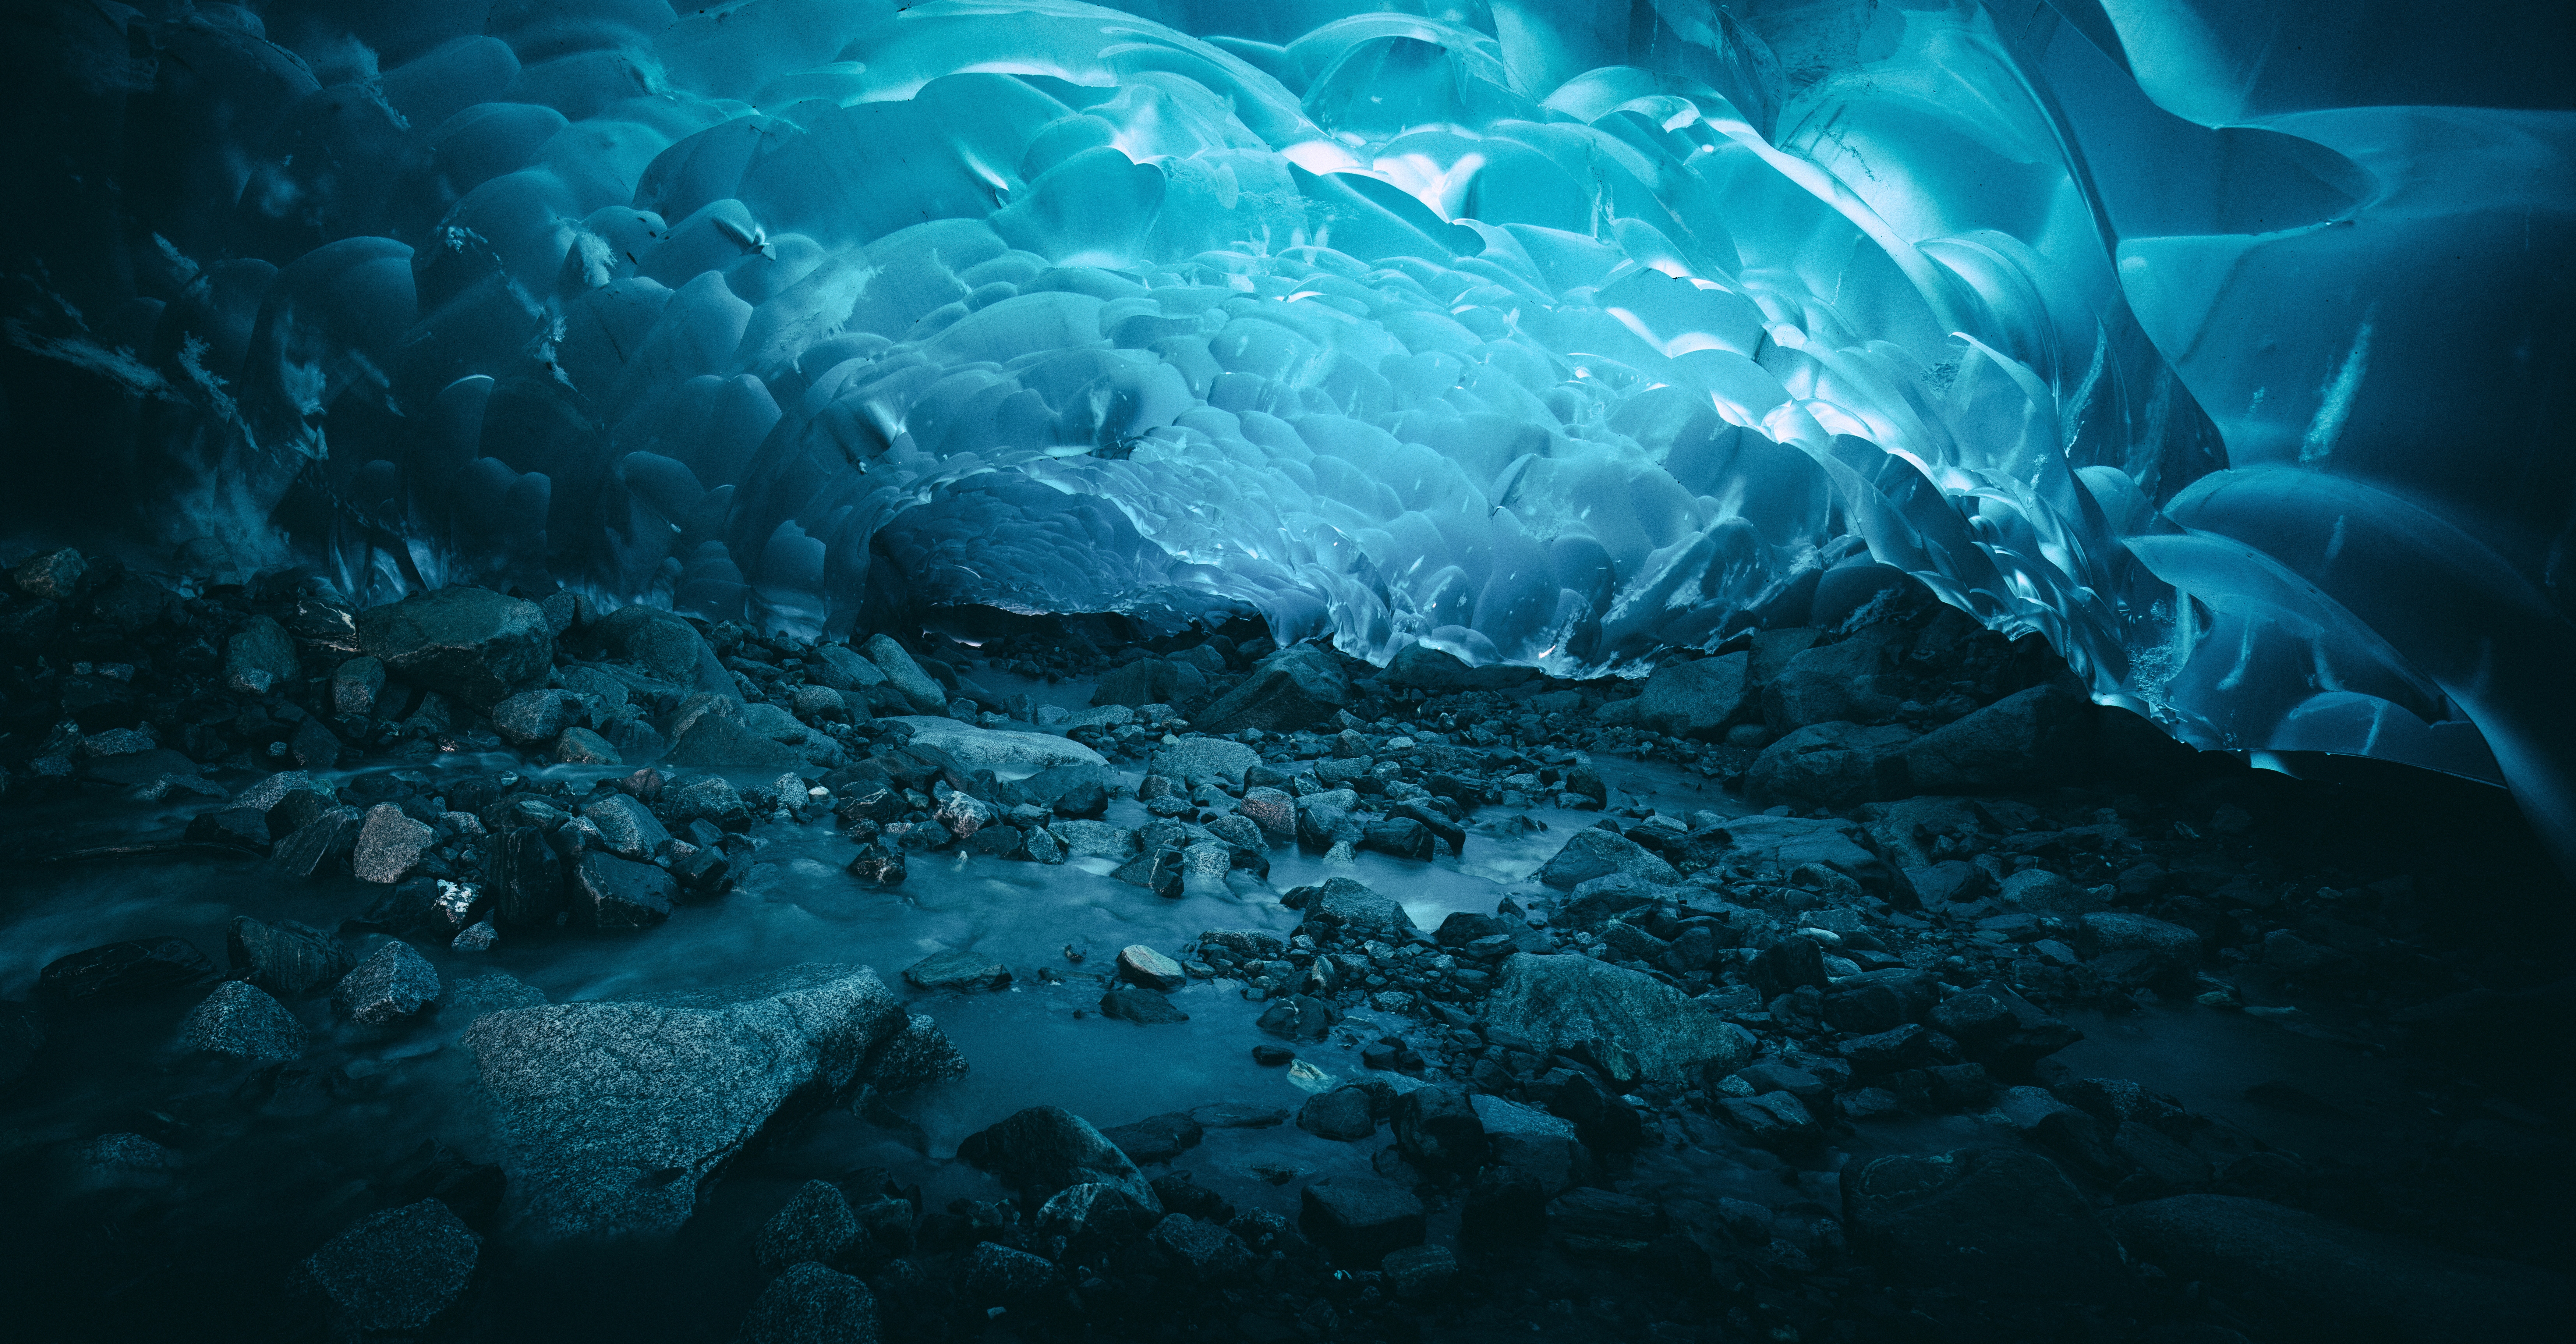 HD wallpaper, 8K, Frozen, Underwater, Alaska, Mendenhall Glacier, 5K, Glacier, Ice Caves, Turquoise